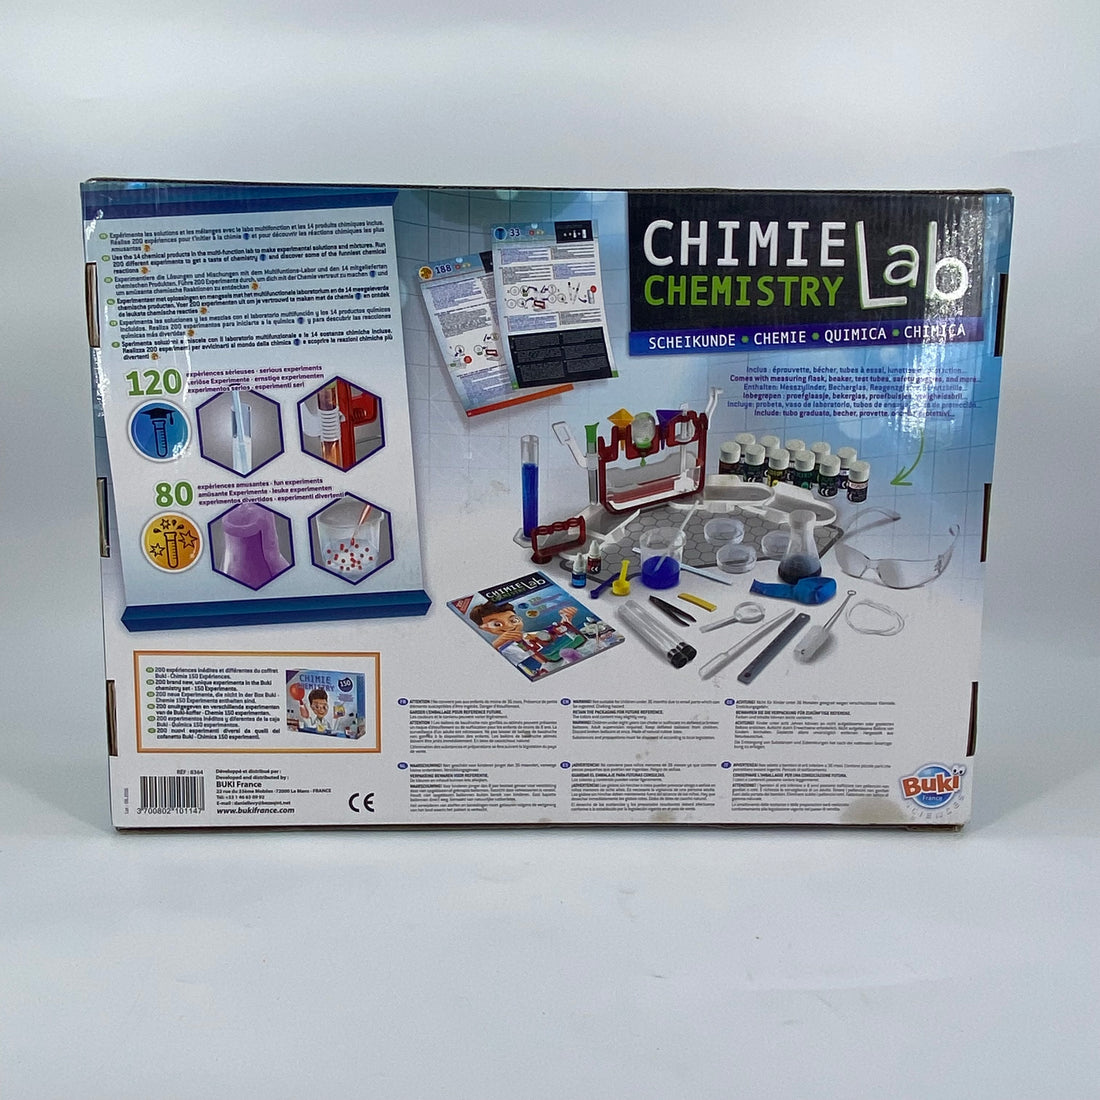 Chimie lab